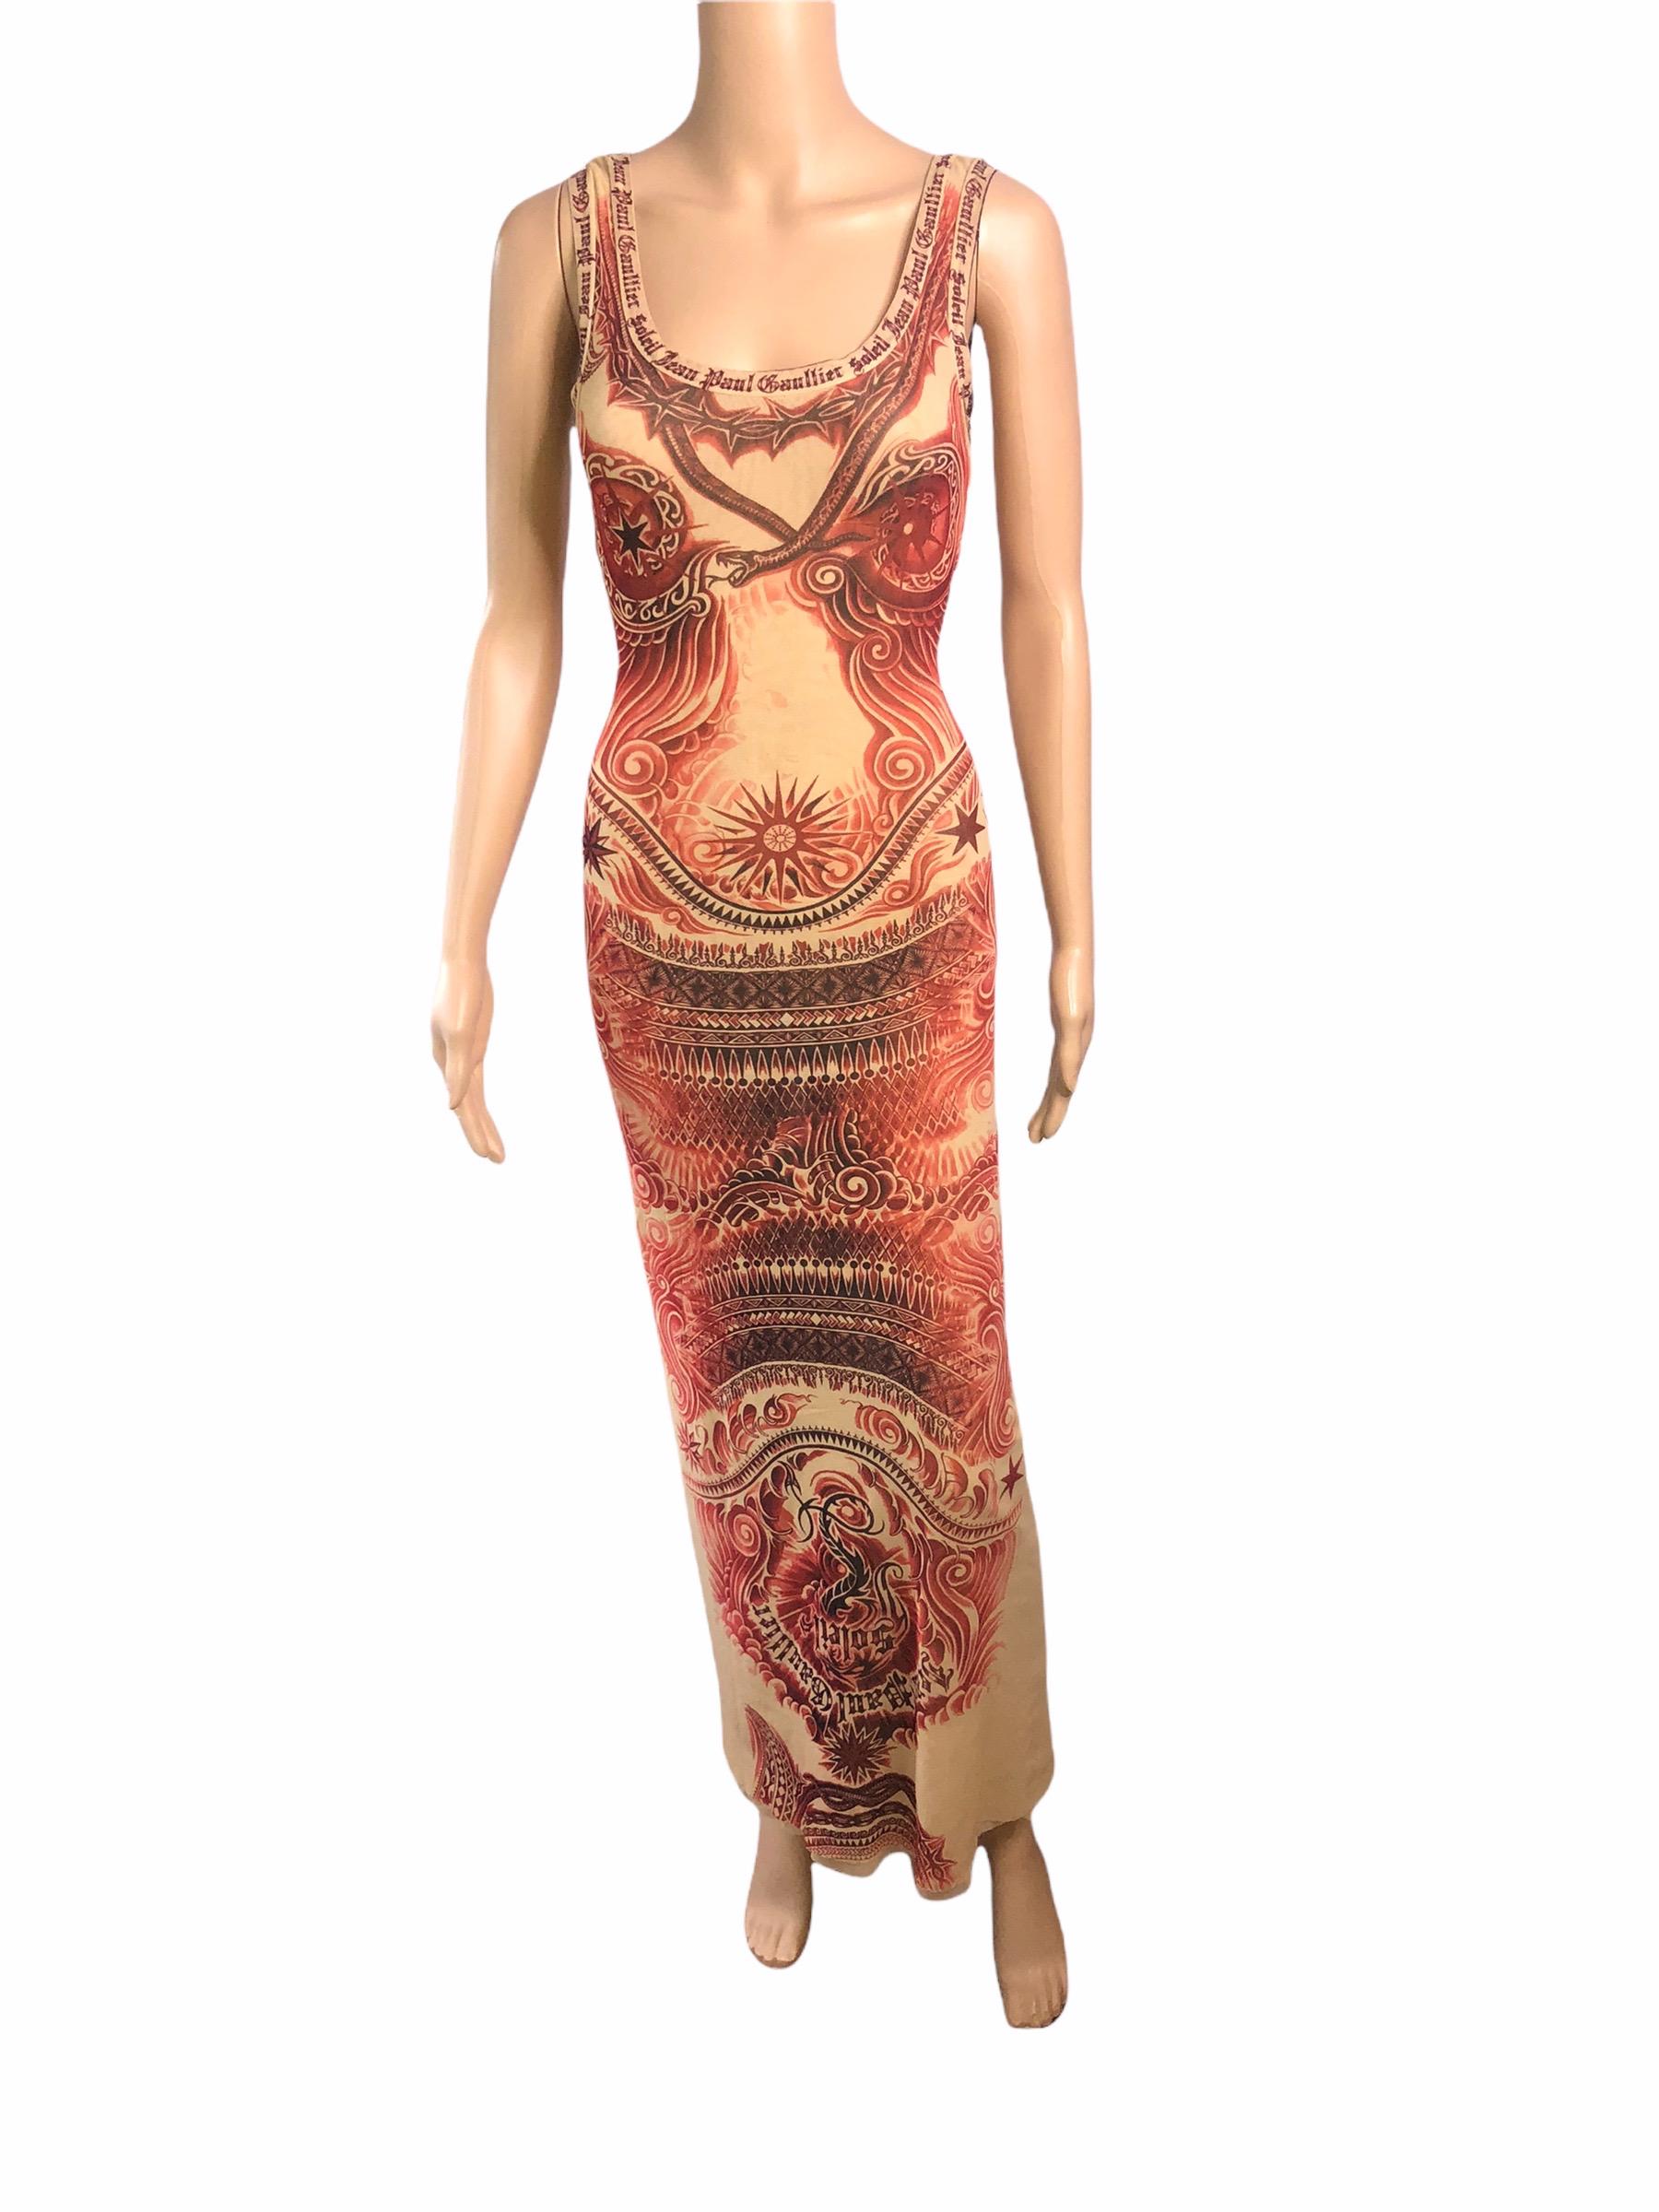 Jean Paul Gaultier Soleil Vintage Tattoo Bodycon Mesh Bolero Dress 2 Piece Set For Sale 3